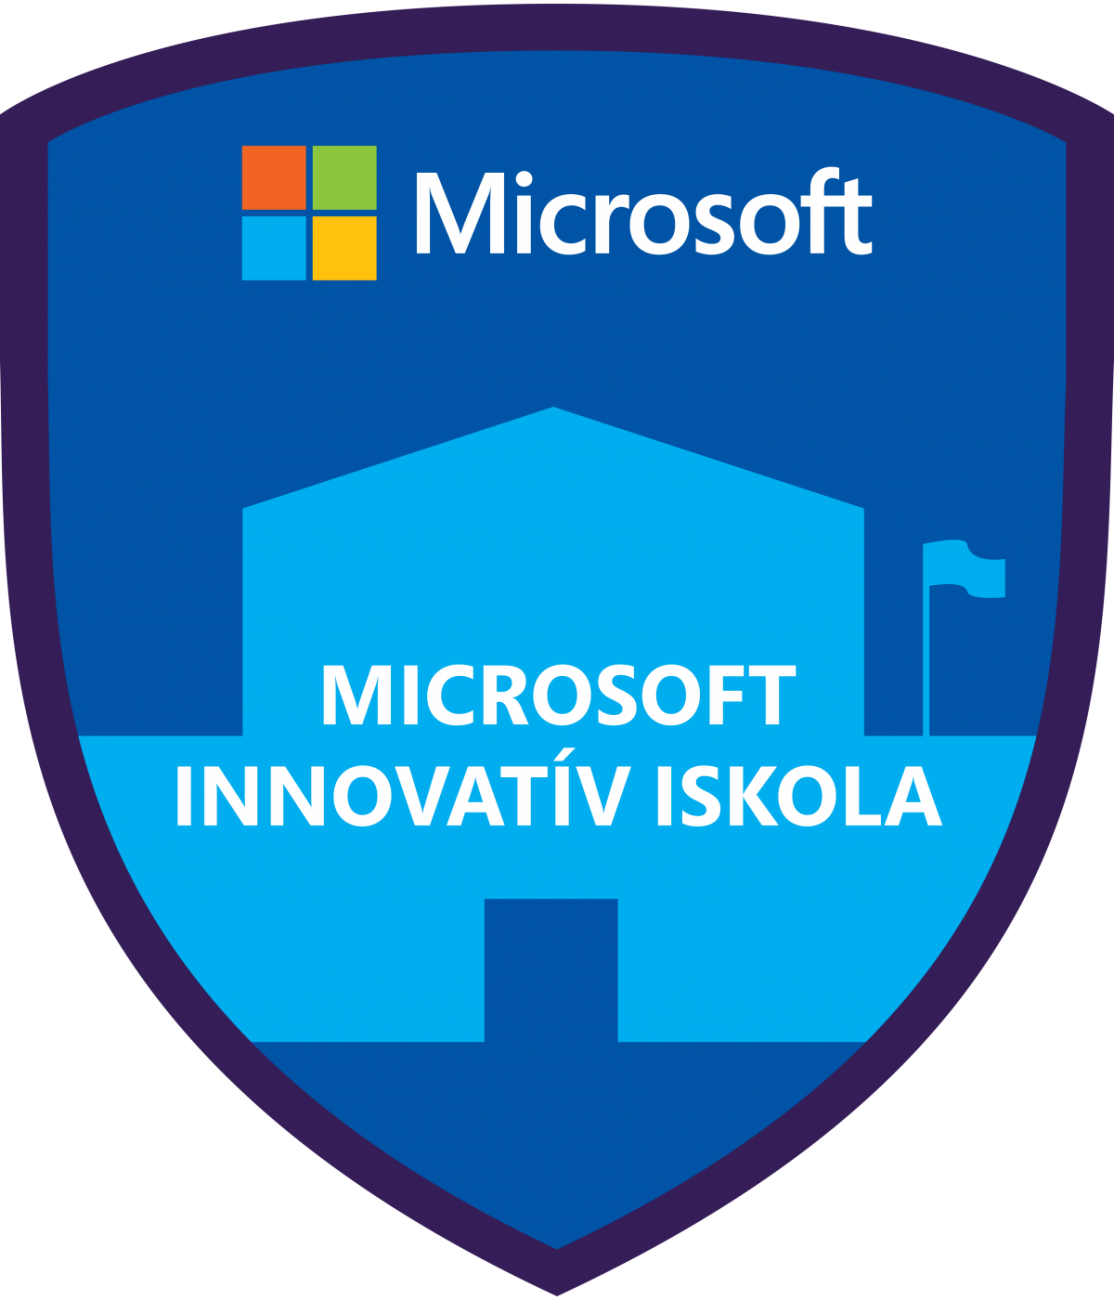 kcss_microsoft-innovativ-iskola-logo_20210622